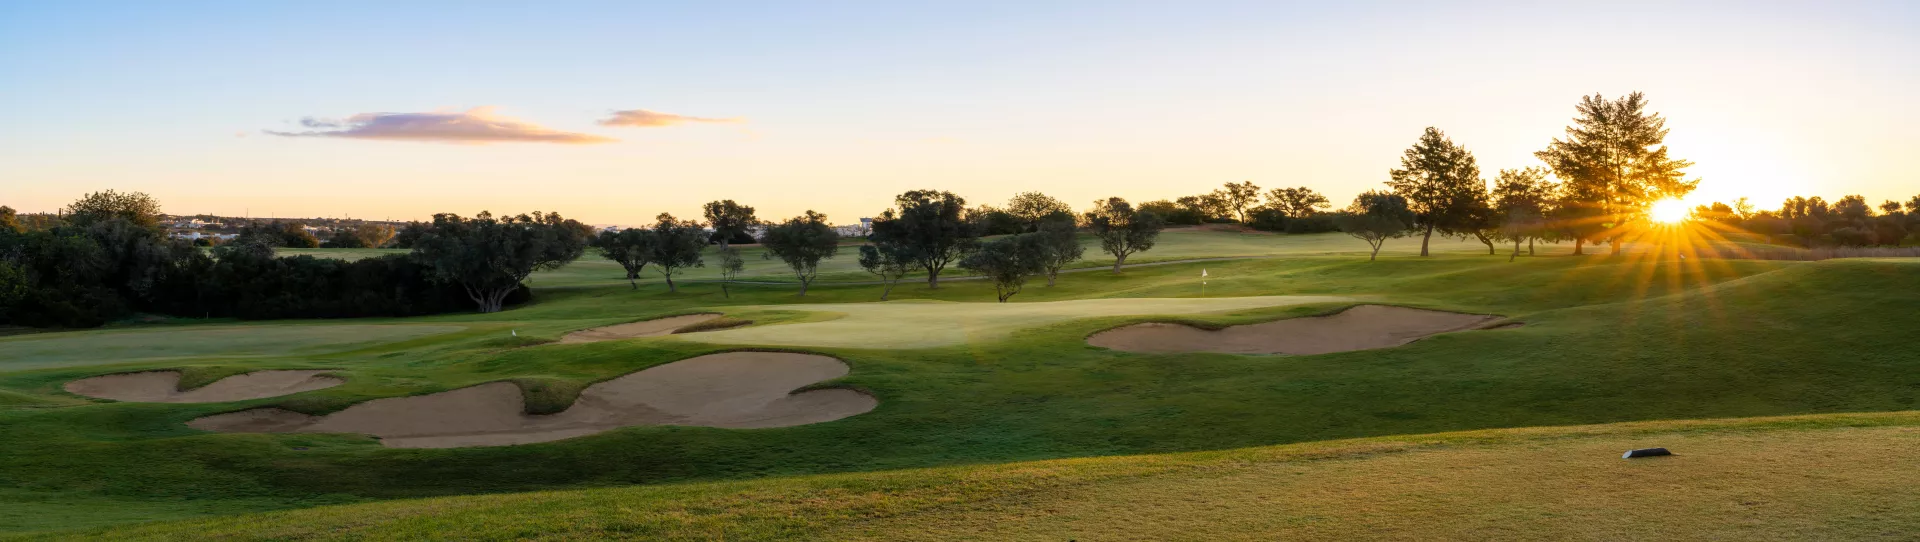 Portugal golf courses - Vale da Pinta Golf Course - Photo 2